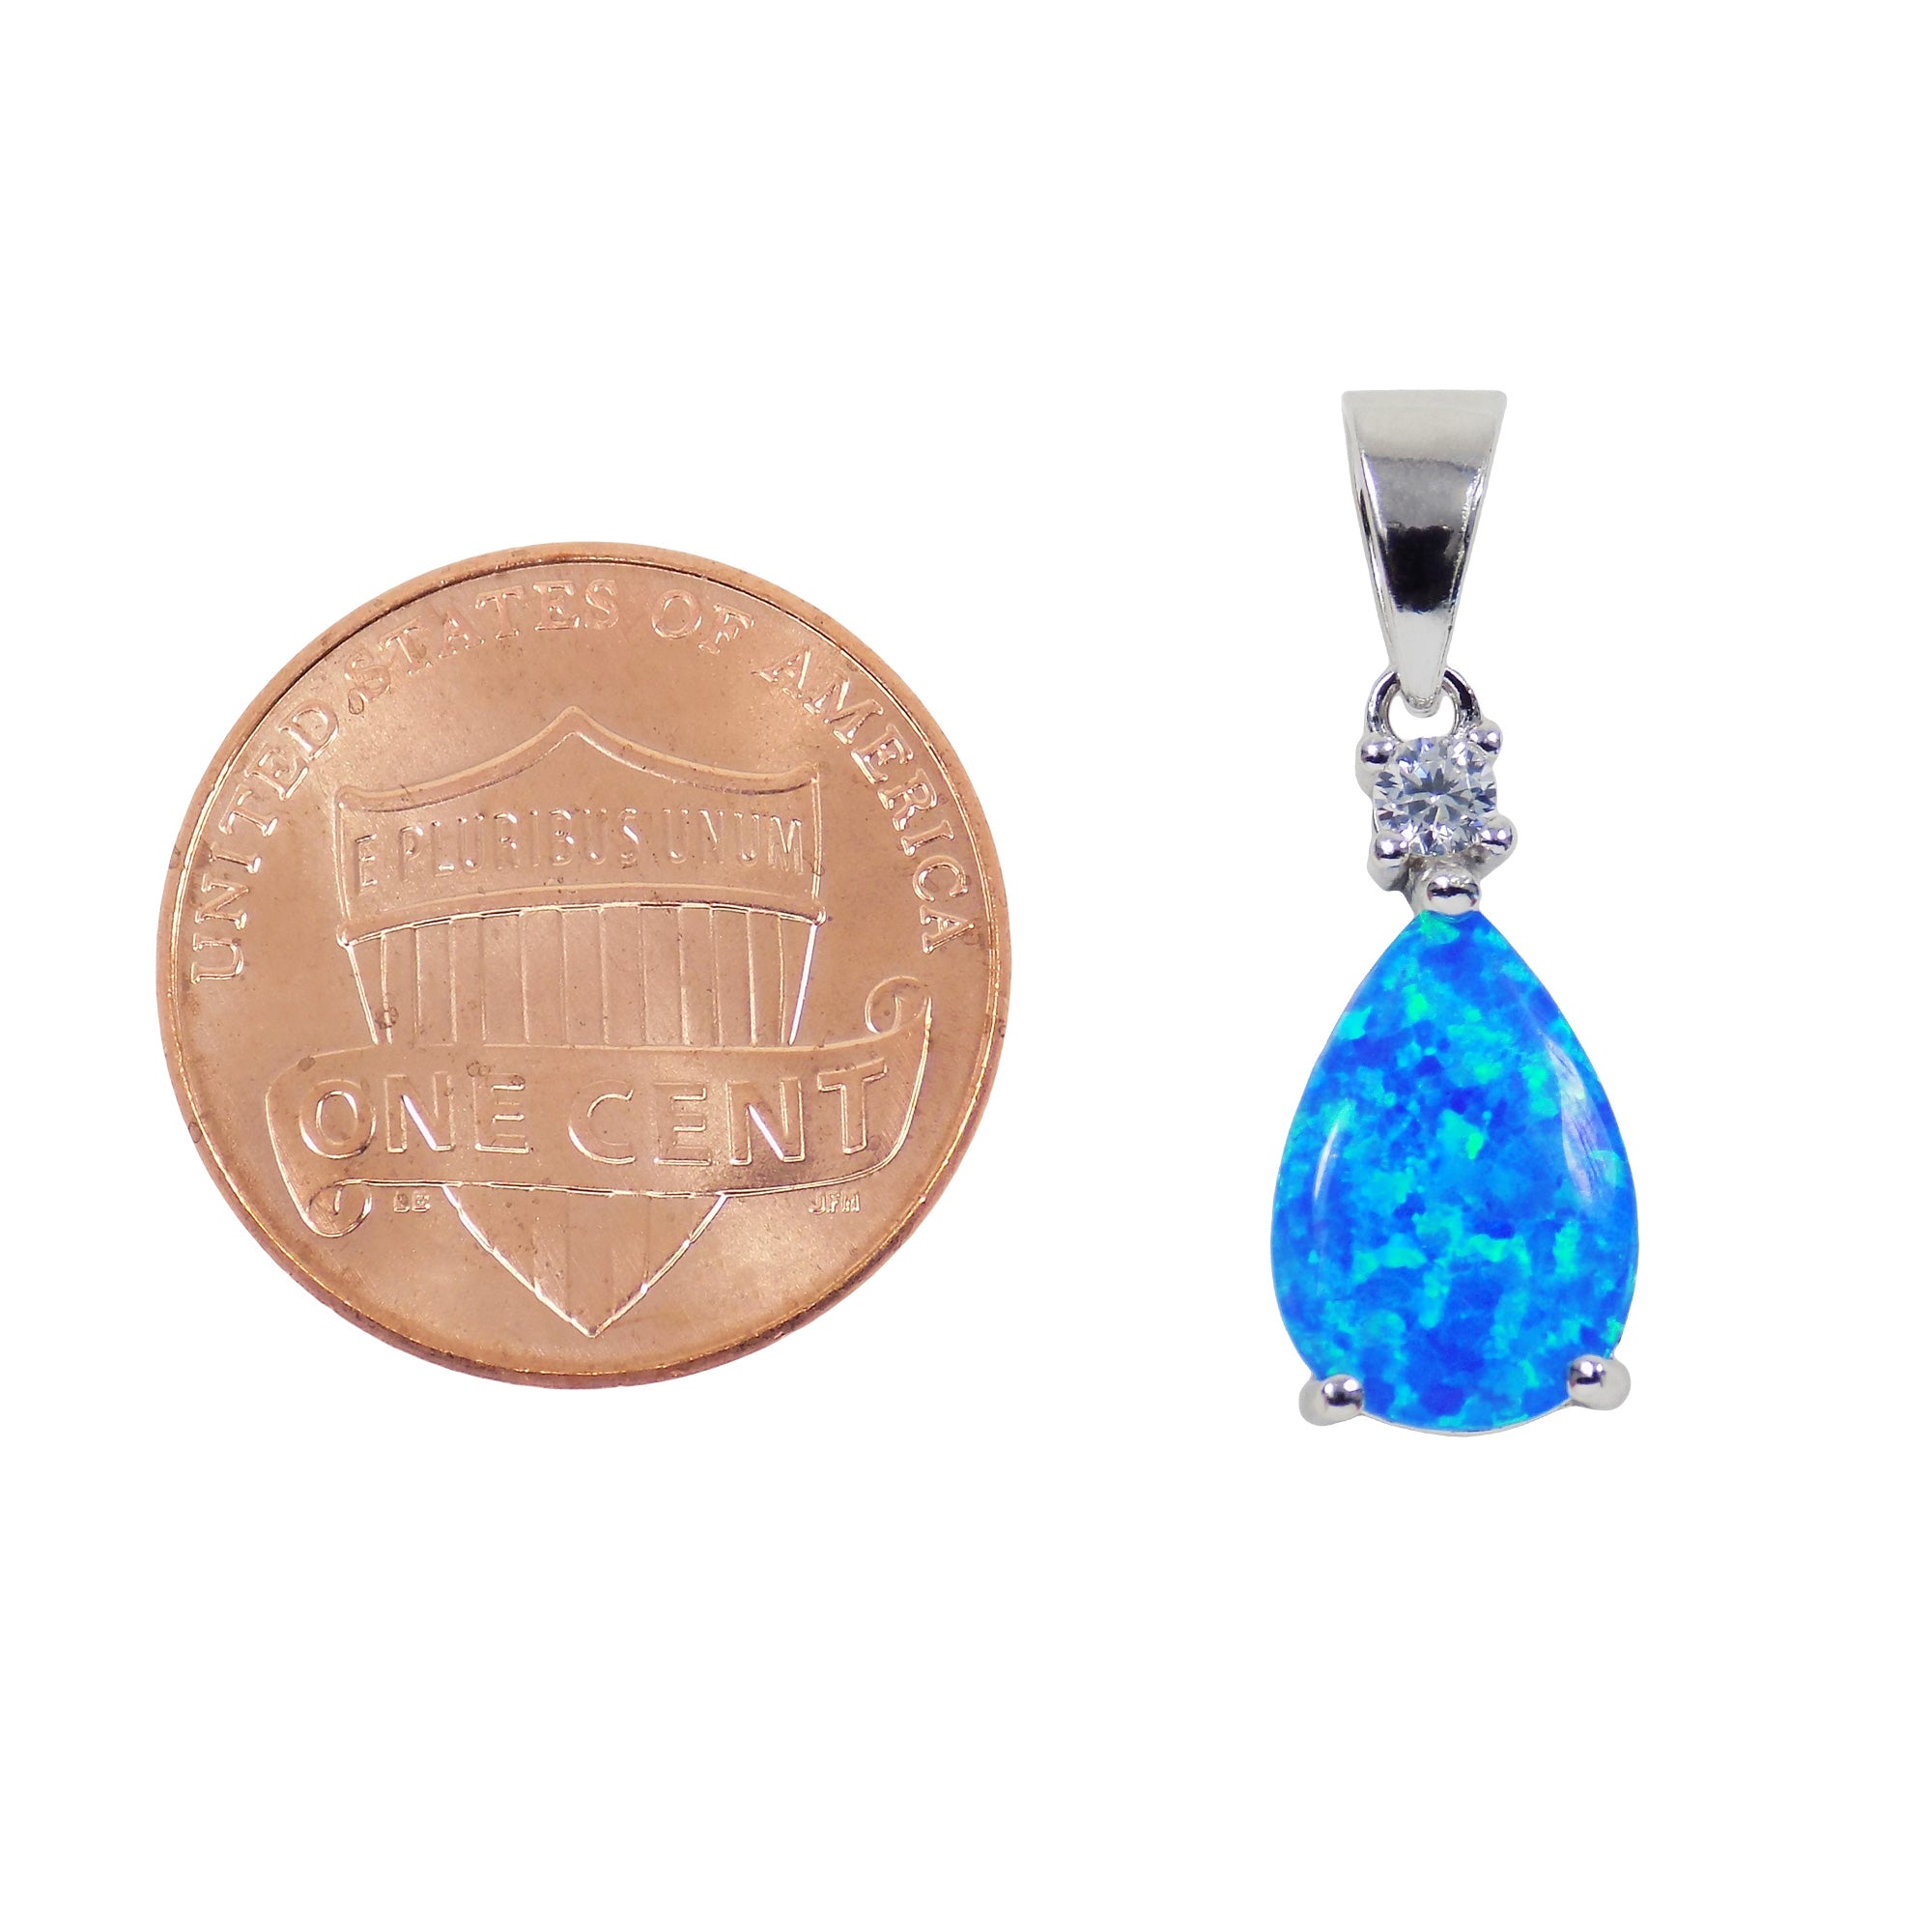 Tear Drop Pendant, Opal Teardrop Sterling Silver Pendant, Blue fire Lab Created Opal and Cubic Zirconia Charm. Opal Drop Pendant